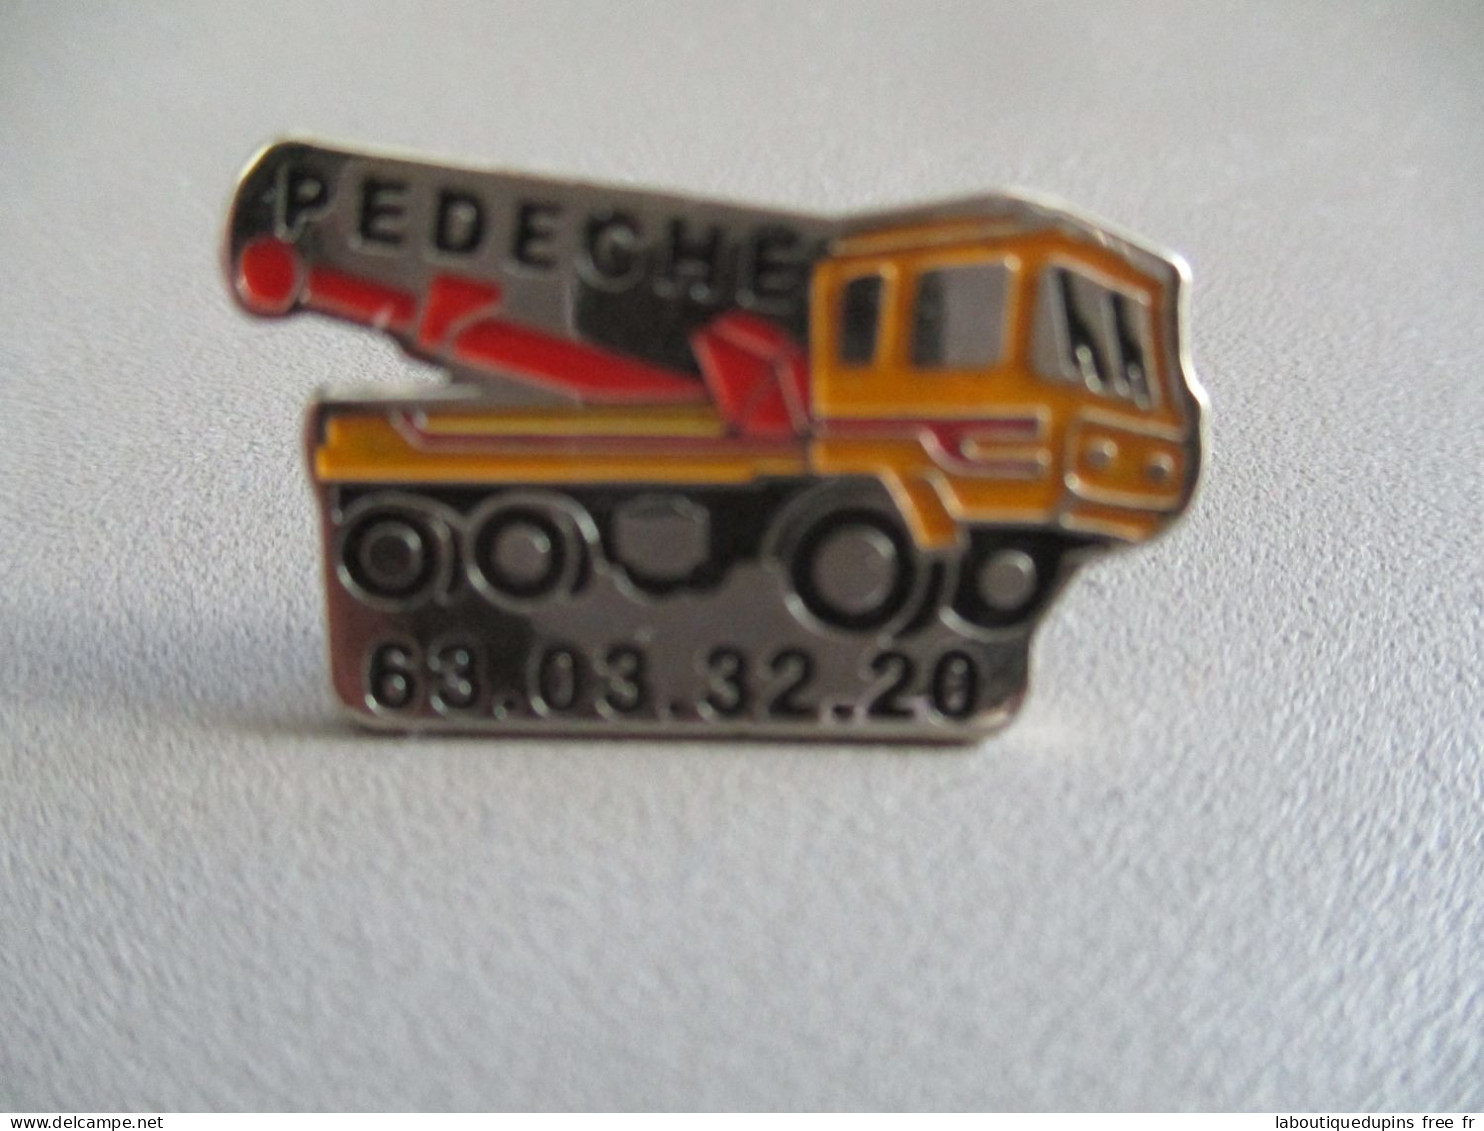 Pin's Lot 005 -- Pedeche 63 03 32 20  -- Exclusif Sur Delcampe - Transports